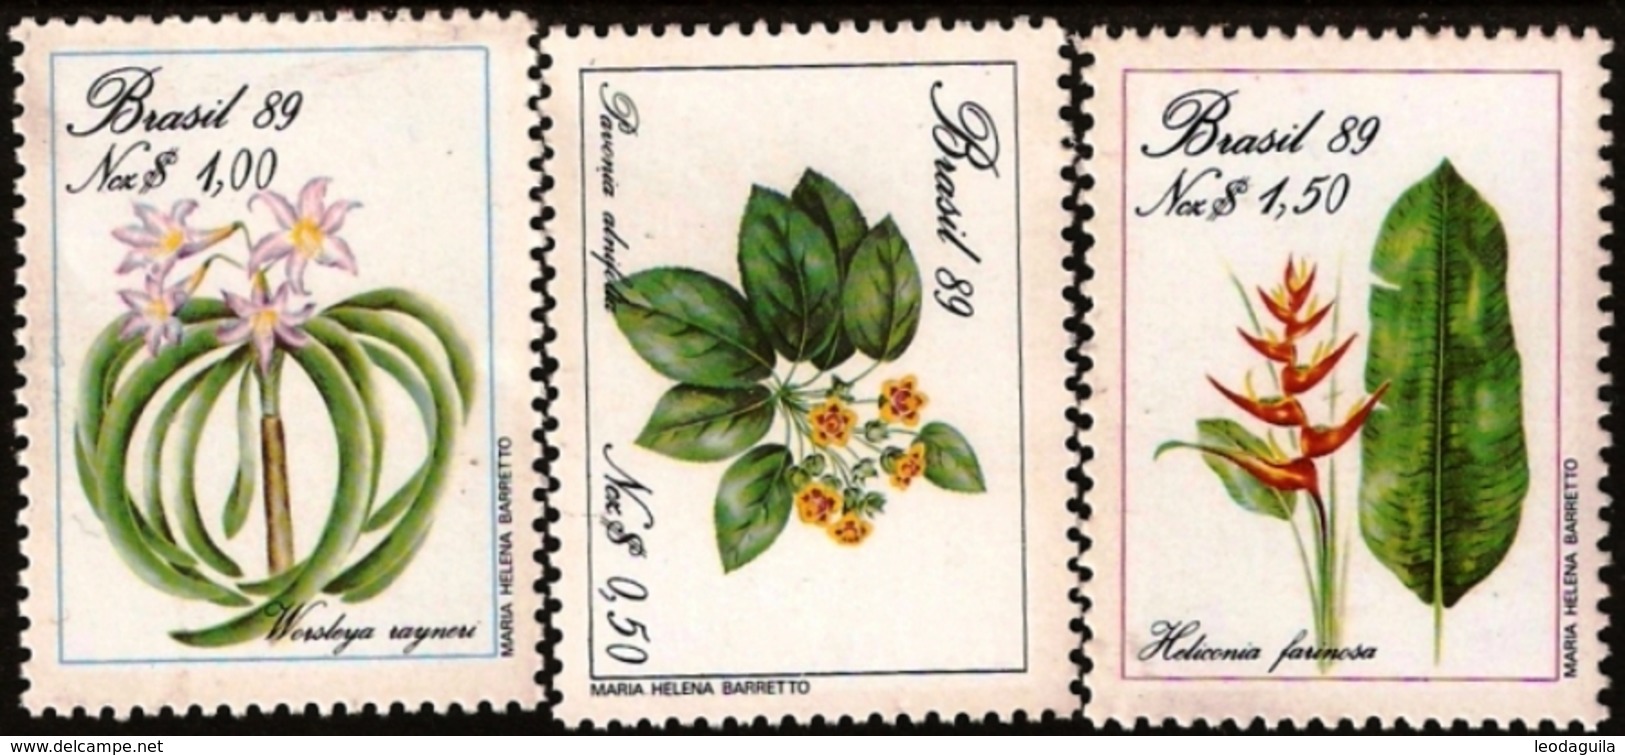 BRAZIL #2168-70 - PRESERVATION OF THE BRAZILIAN FLORA -  FLOWERING PLANTS  -  1989 - Nuovi